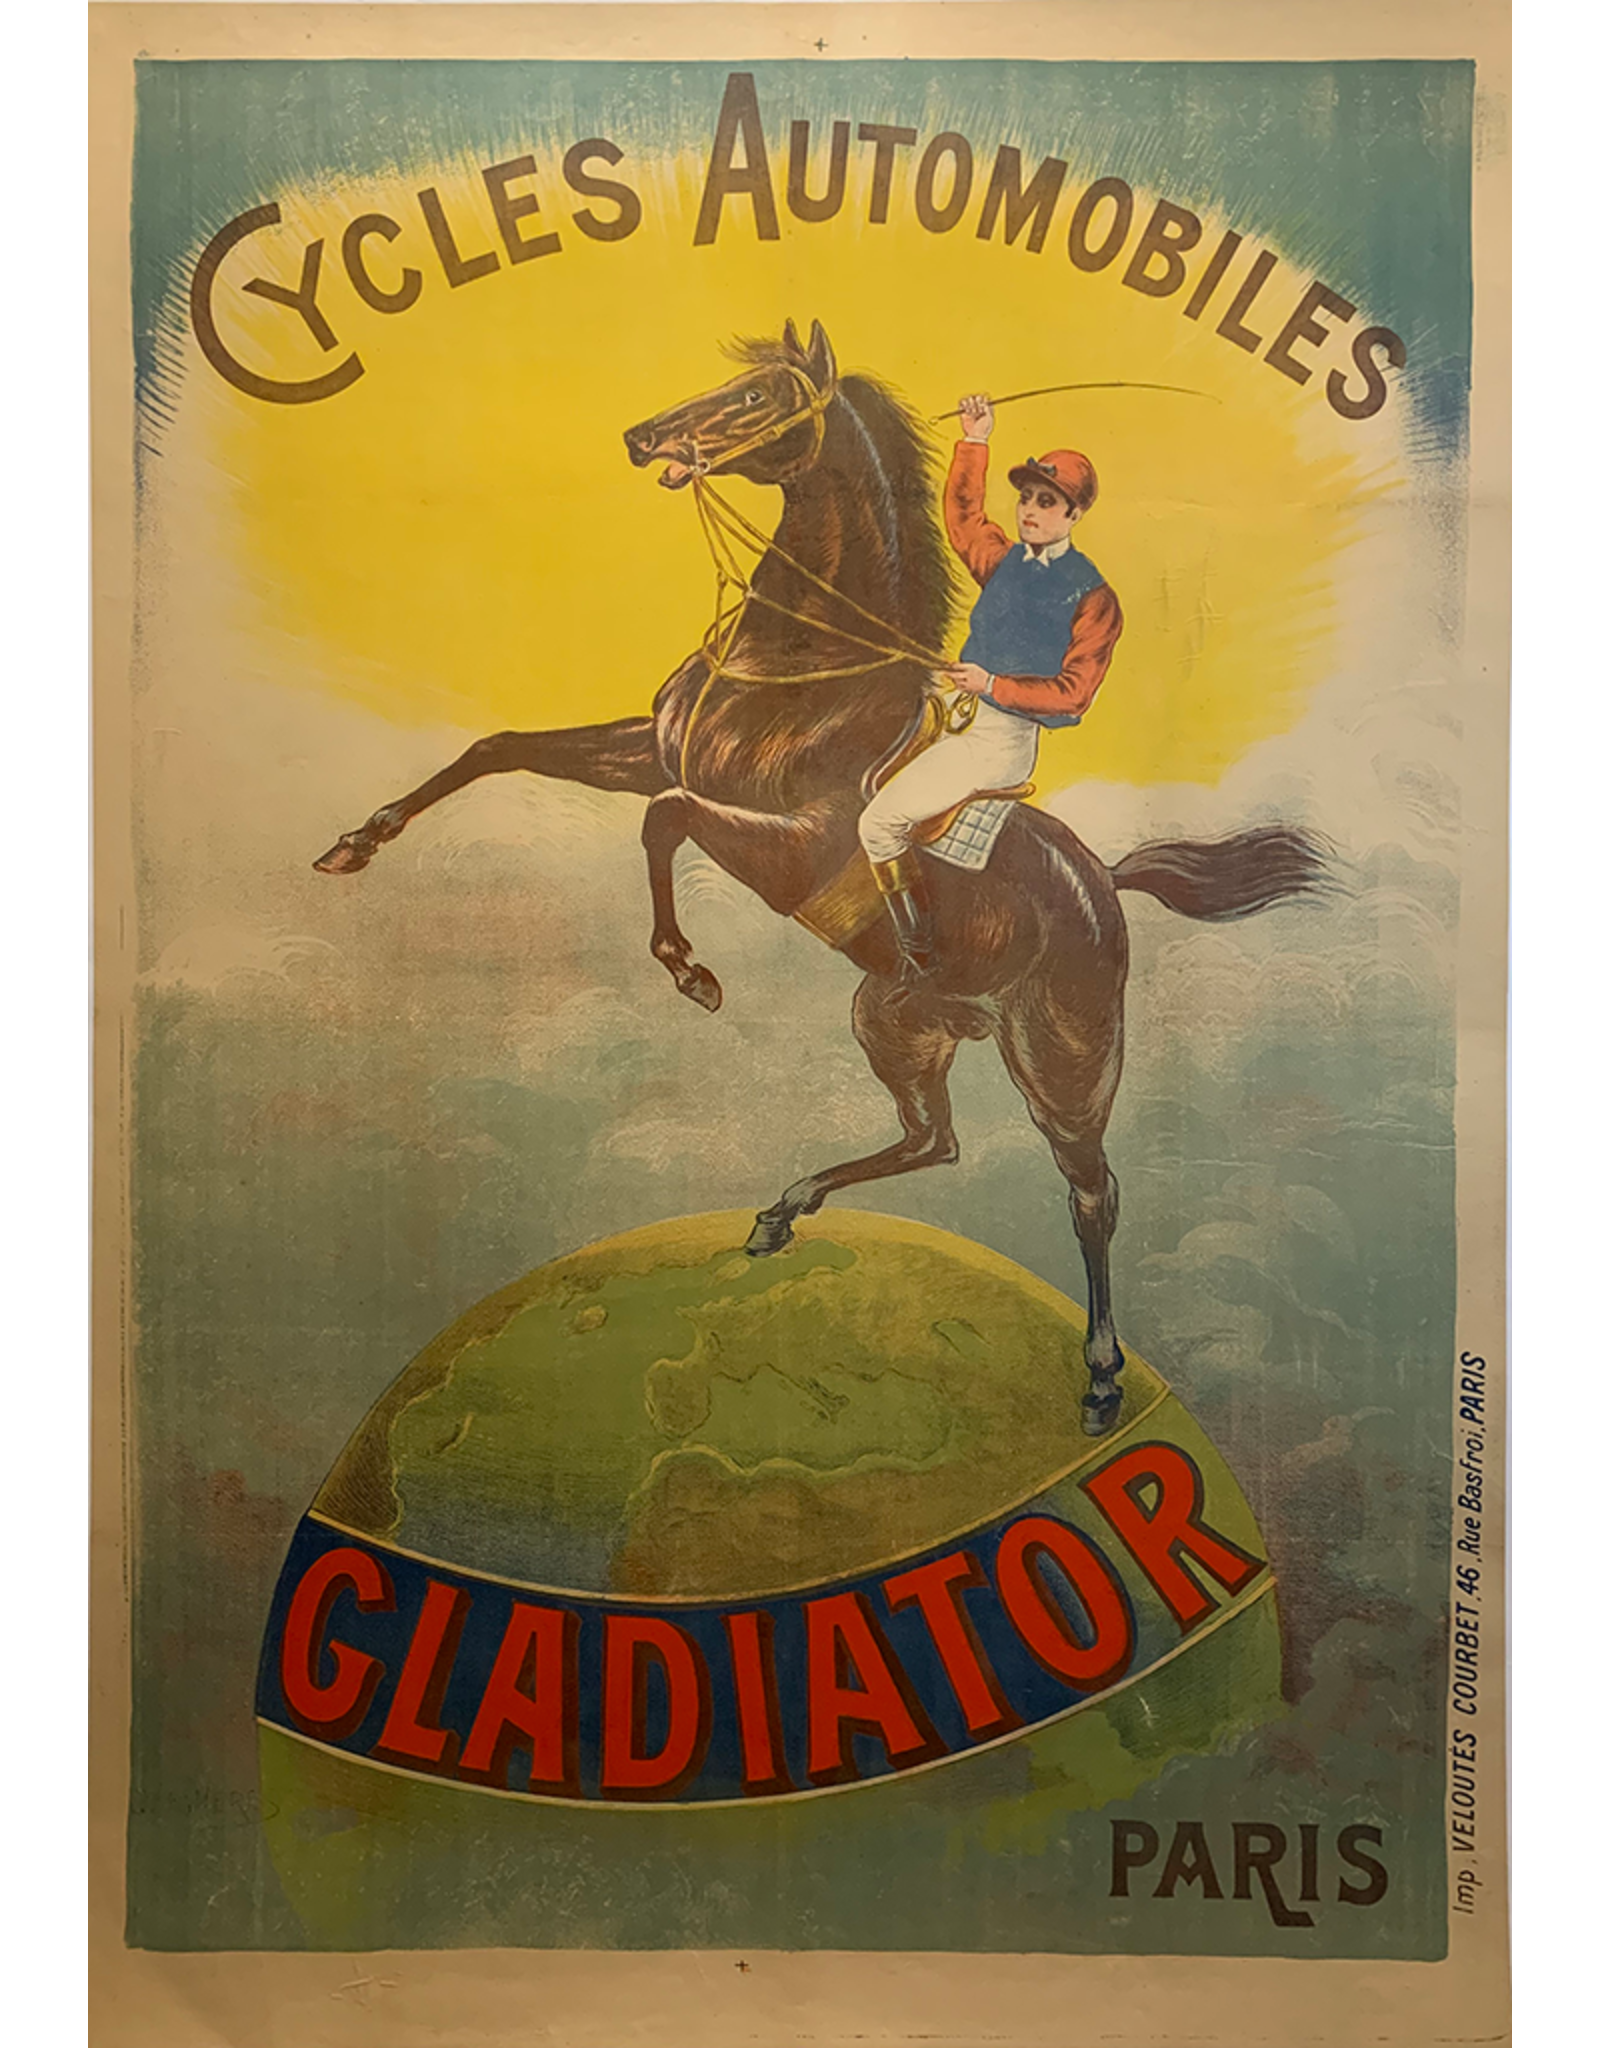 SPV Cycles Automobiles, Gladiator